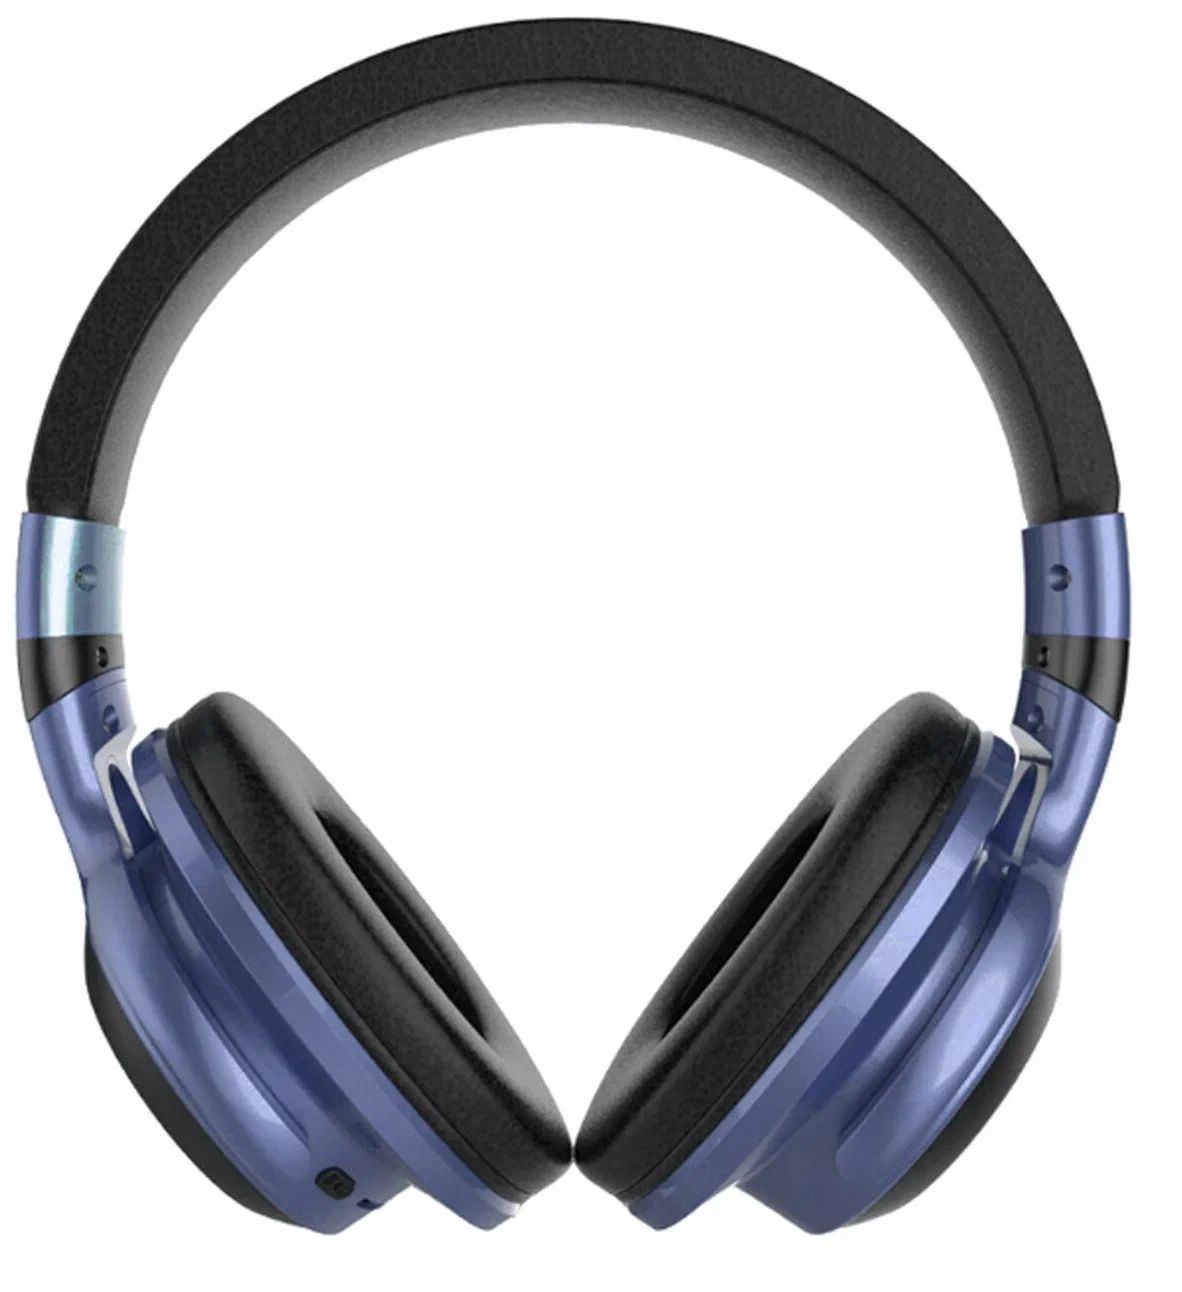 Luminous наушники беспроводные. H1 Pro Bluetooth Headphones HIFI stereo Wireless Earphone Gaming Headsets over-Ear Noise Canceling with Mic support TF Card. Наушники беспроводные накладные с эмблемой v. Наушники накладные беспроводные с USB Type-c входом.